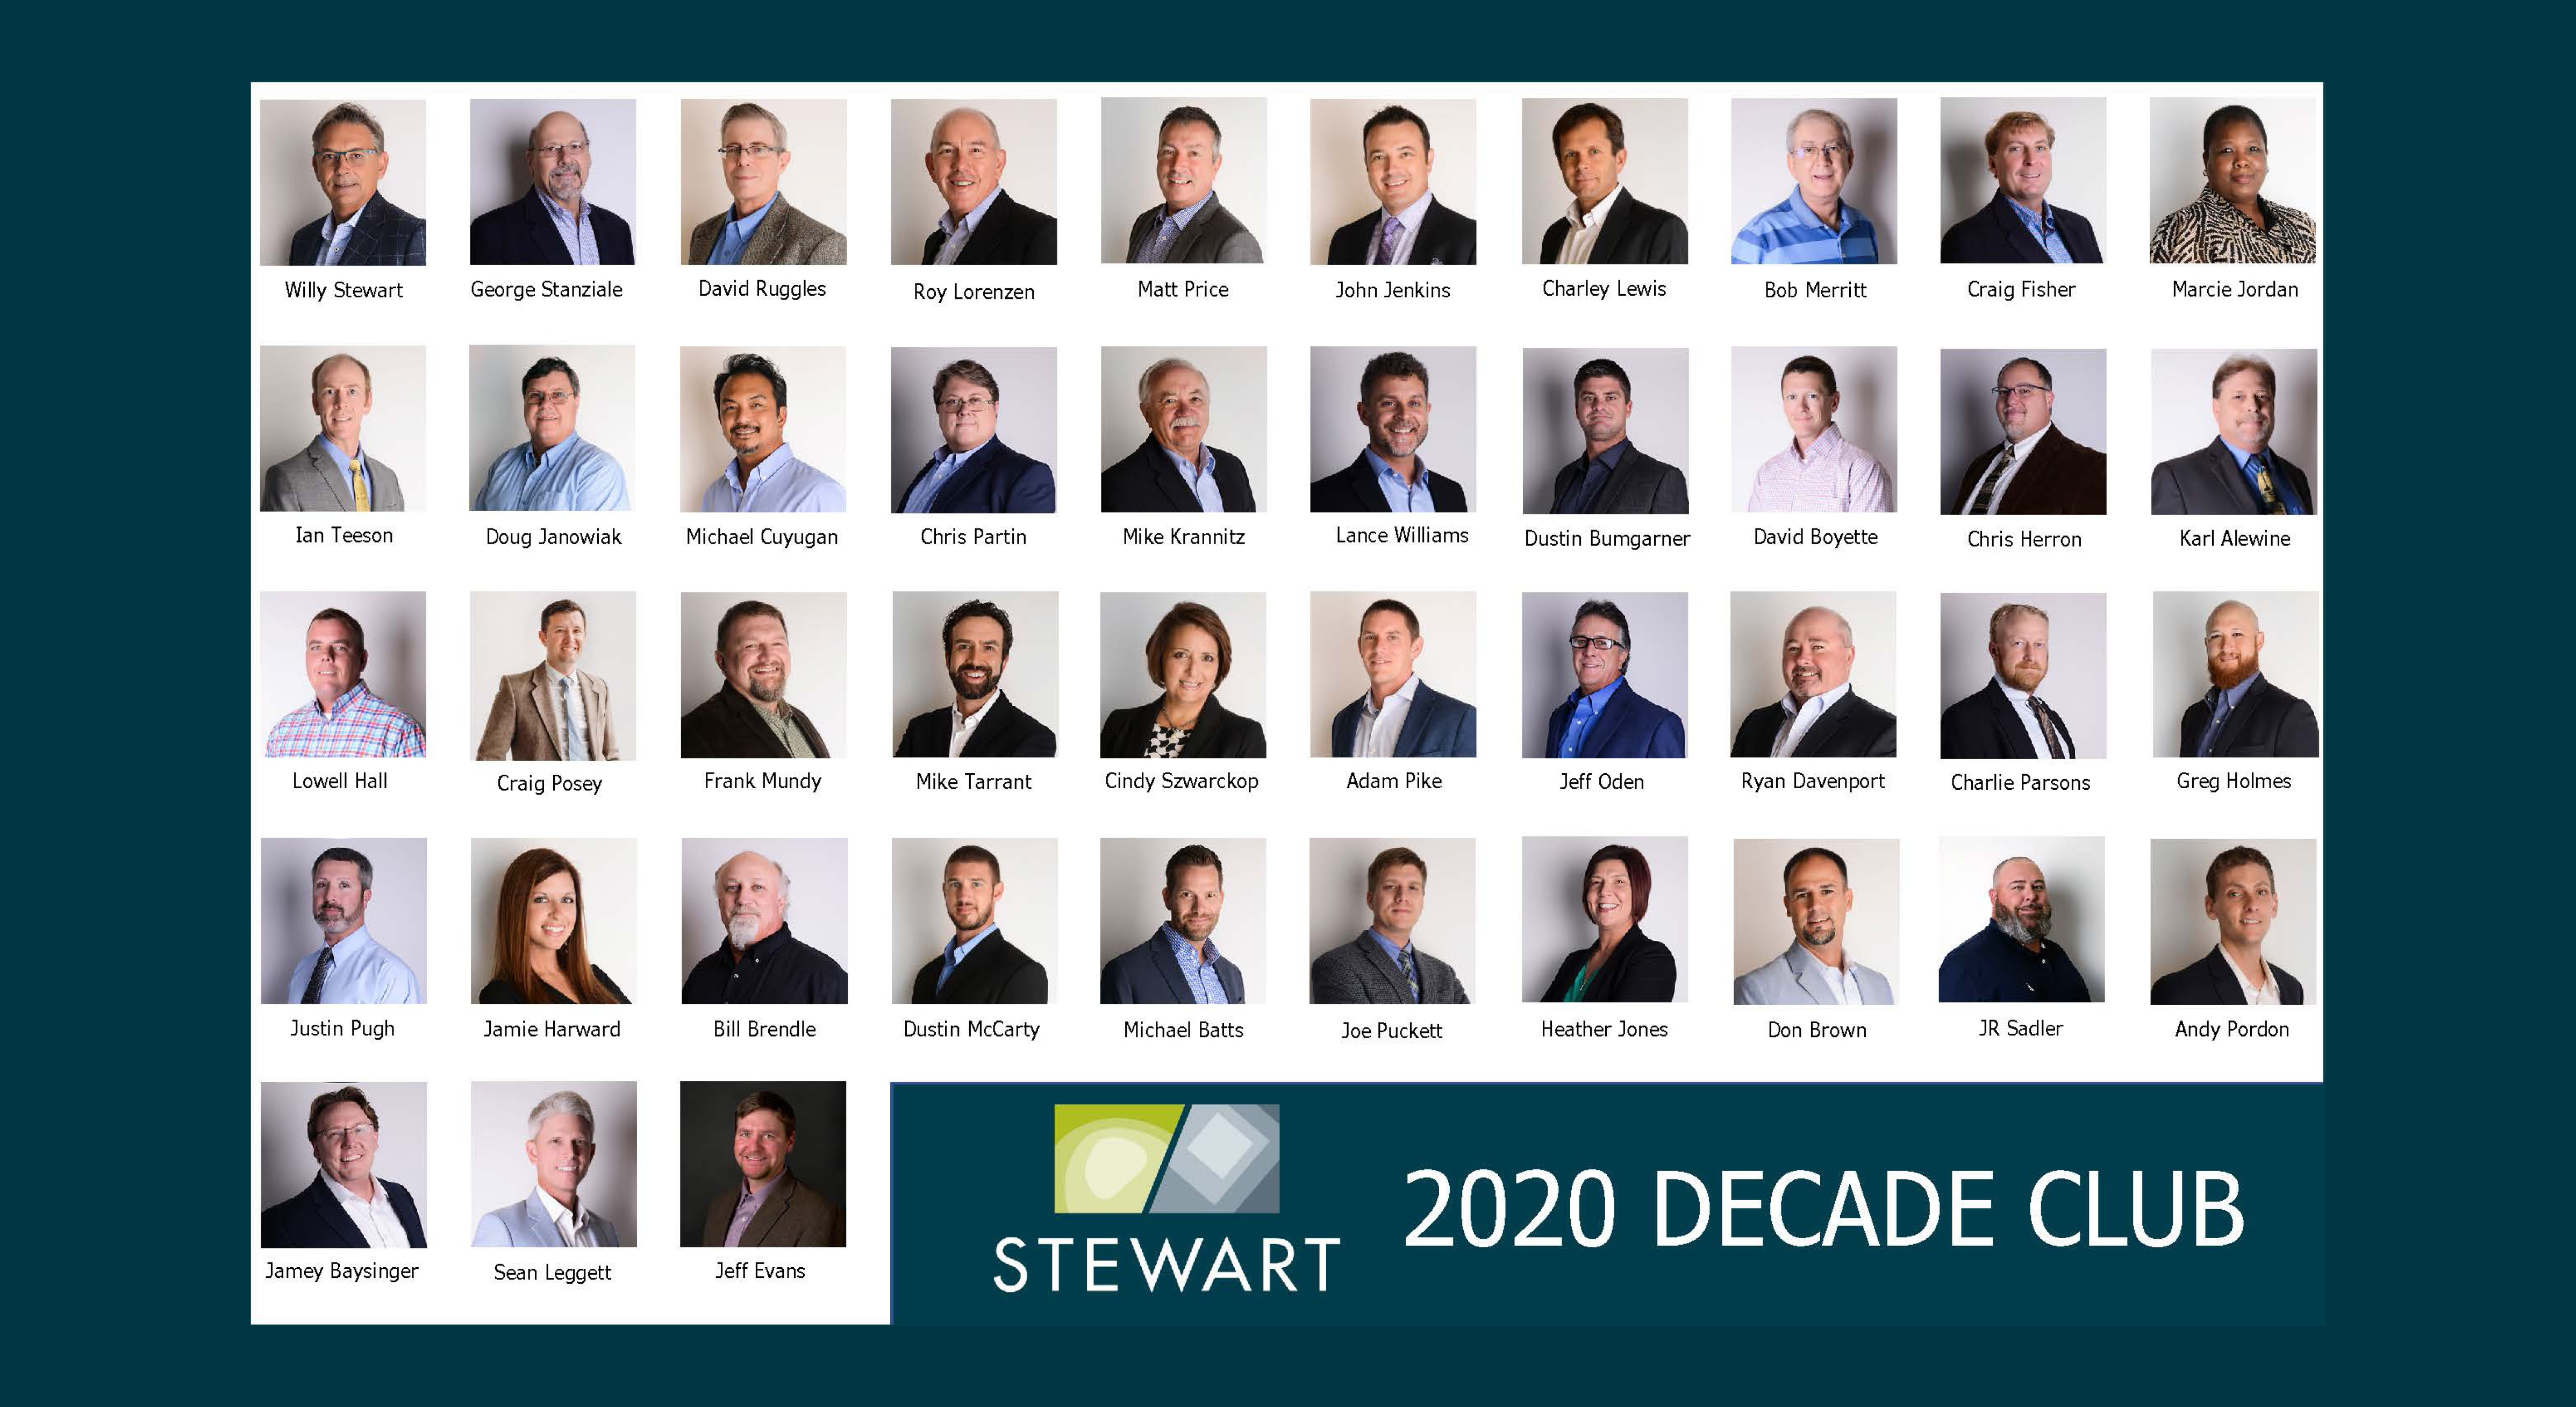 Congrats to the 2020 Stewart Decade Club!